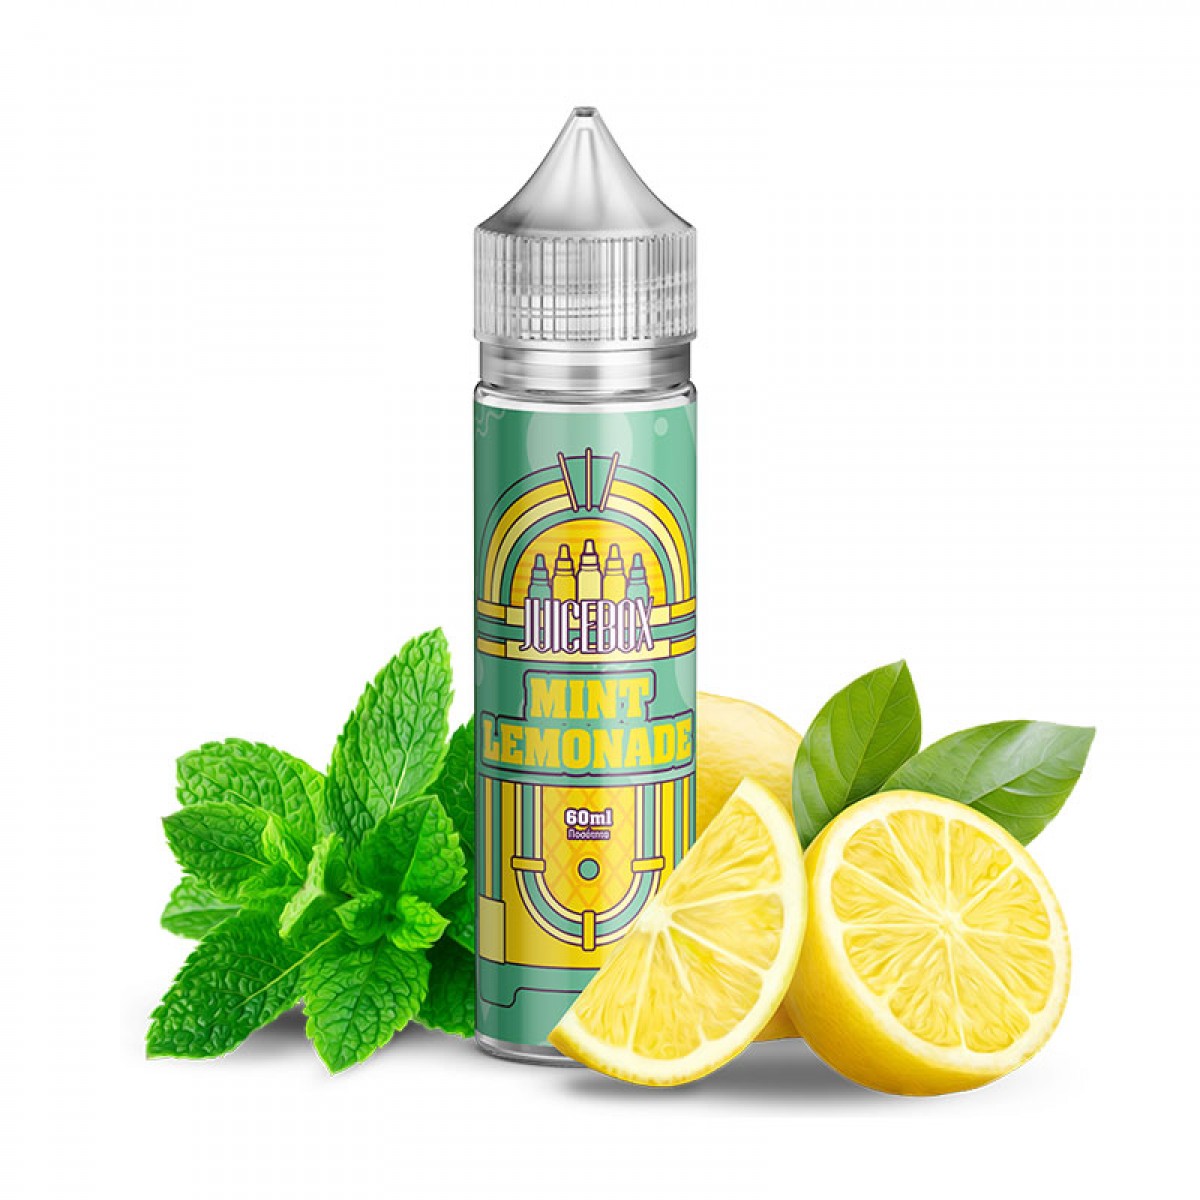 Juicebox Mint Lemonade Flavorshot 12ml/60ml